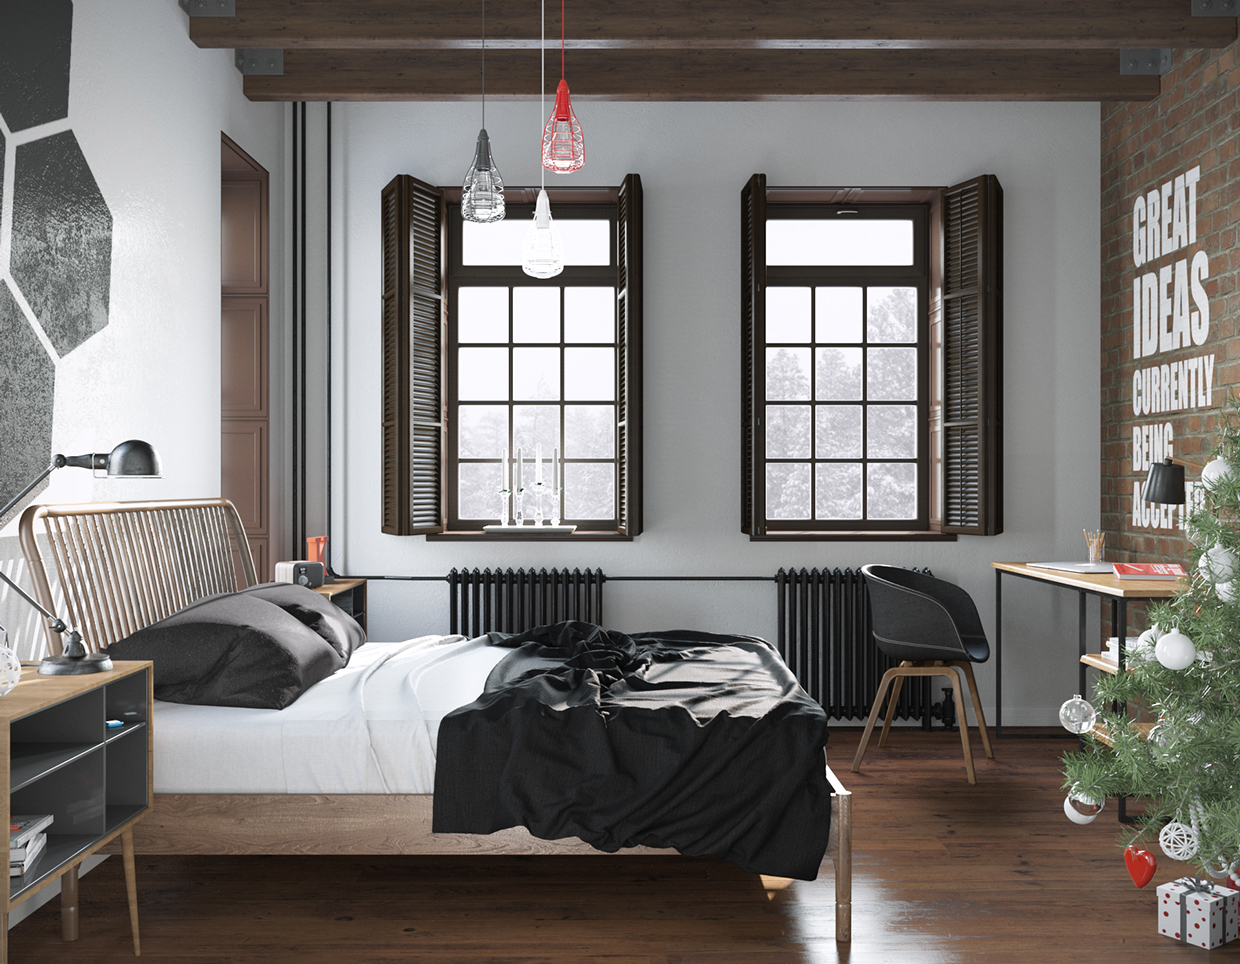 Scandinavian bedroom design "width =" 1240 "height =" 964 "srcset =" https://mileray.com/wp-content/uploads/2020/05/1588511252_608_Scandinavian-Bedroom-Design-For-Woman-With-A-White-Color-Scheme.jpg 1240w, https: // myfashionos. com / wp-content / uploads / 2016/04 / Denis-Krasikov-1-300x233.jpg 300w, https://mileray.com/wp-content/uploads/2016/04/Denis-Krasikov-1-768x597.jpg 768w, https://mileray.com/wp-content/uploads/2016/04/Denis-Krasikov-1-1024x796.jpg 1024w, https://mileray.com/wp-content/uploads/2016/04/Denis -Krasikov-1-696x541.jpg 696w, https://mileray.com/wp-content/uploads/2016/04/Denis-Krasikov-1-1068x830.jpg 1068w, https://mileray.com/wp-content /uploads/2016/04/Denis-Krasikov-1-540x420.jpg 540w "sizes =" (maximum width: 1240px) 100vw, 1240px